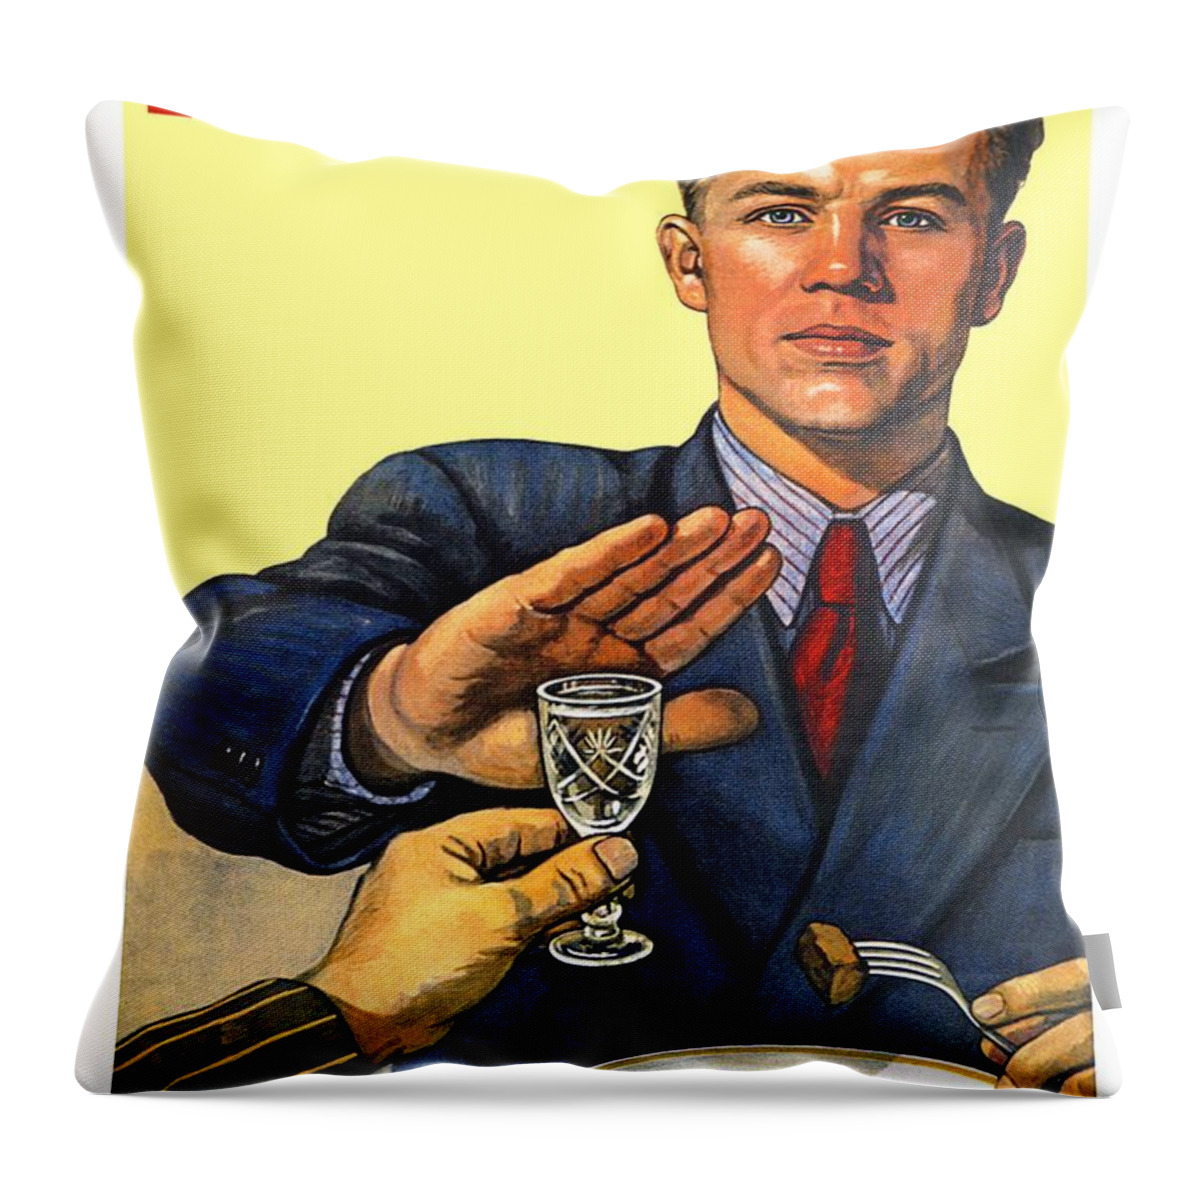 1935 Throw Pillow featuring the digital art 1935 - Soviet Union Anti Alcohol Propaganda Poster - Color by John Madison